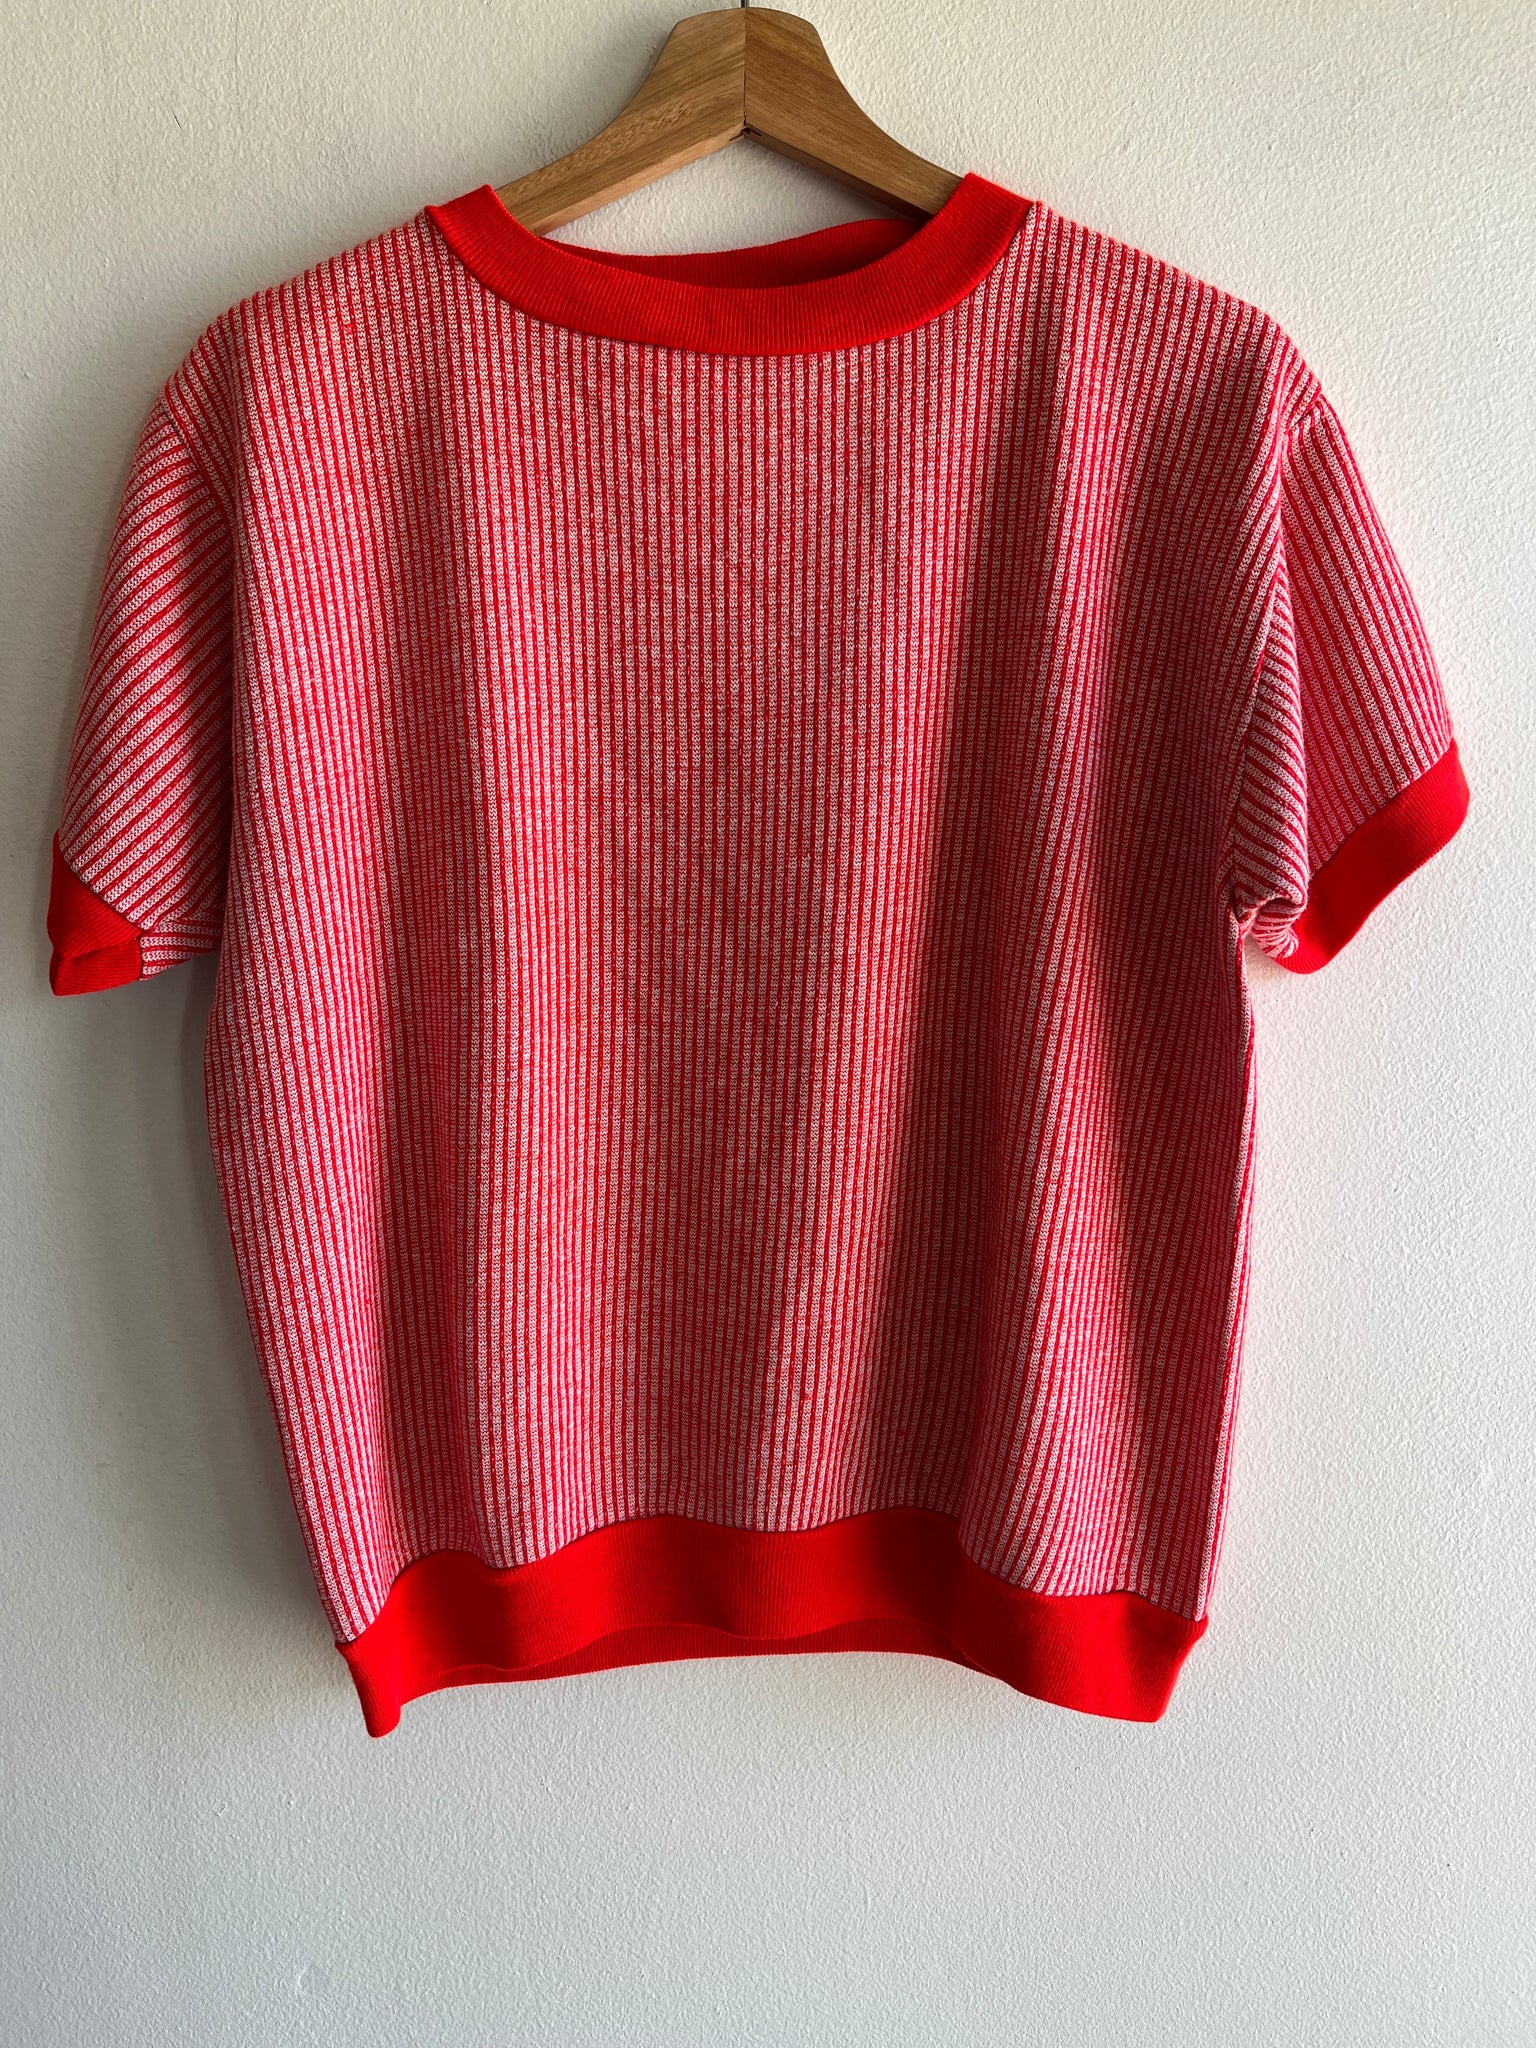 Vintage 1960’s Red Striped Short-Sleeved Sweatshirt